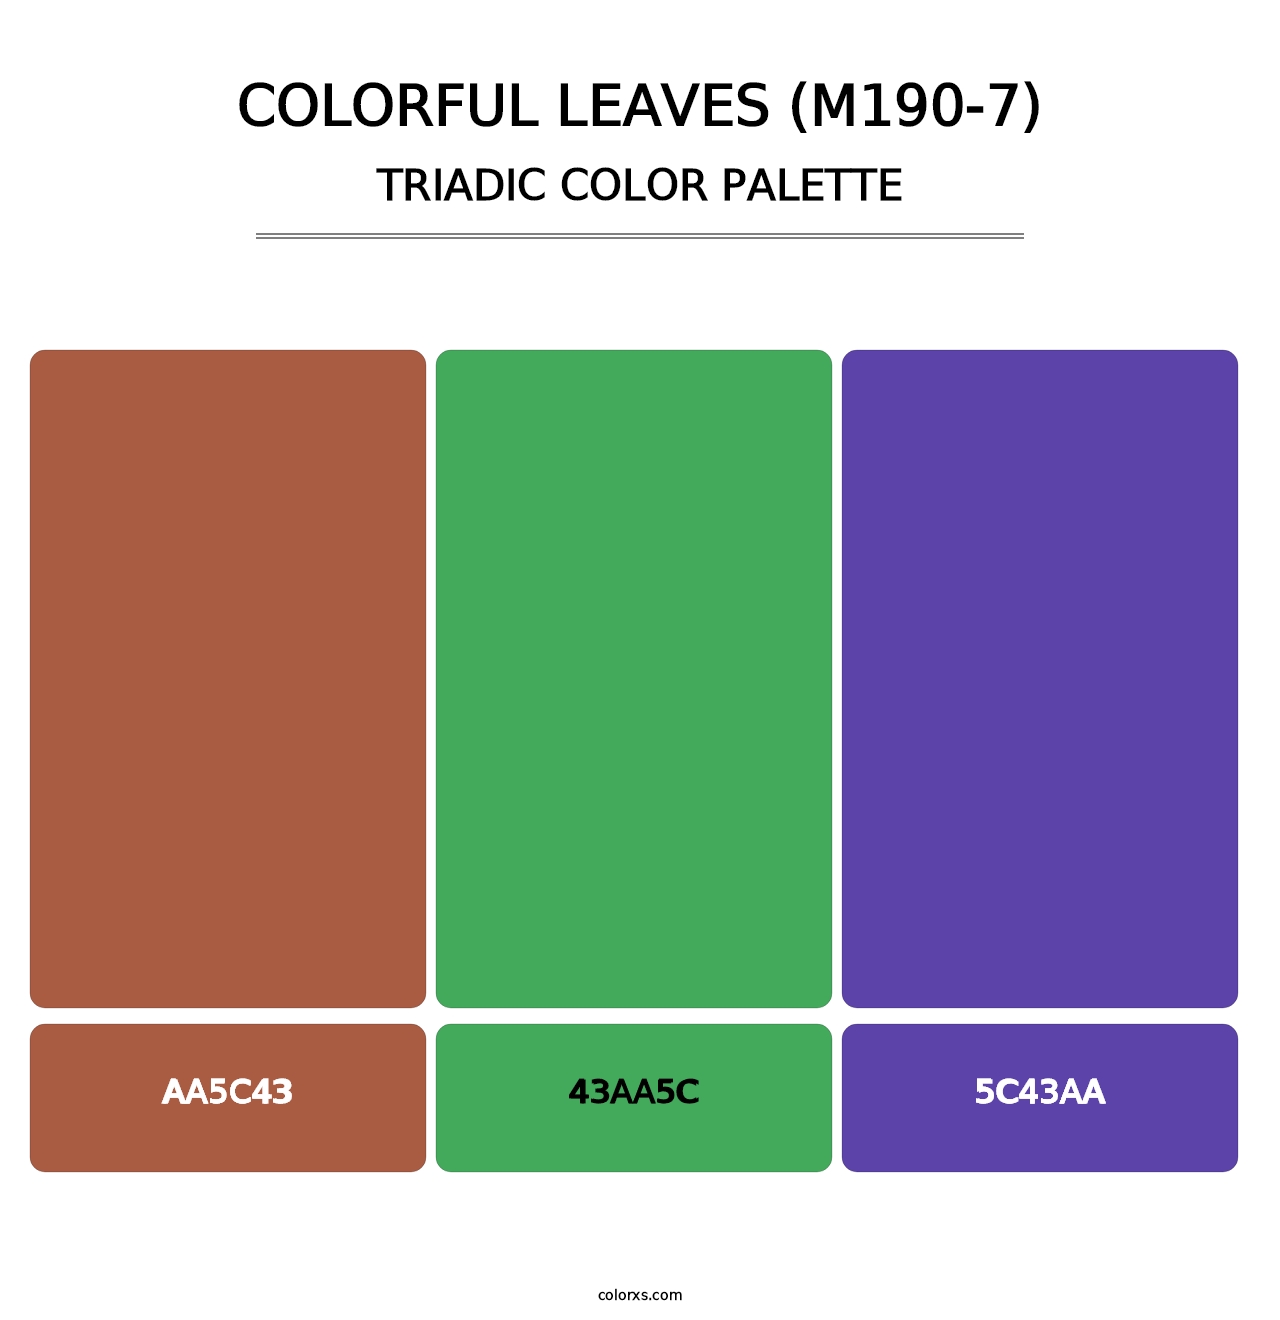 Colorful Leaves (M190-7) - Triadic Color Palette